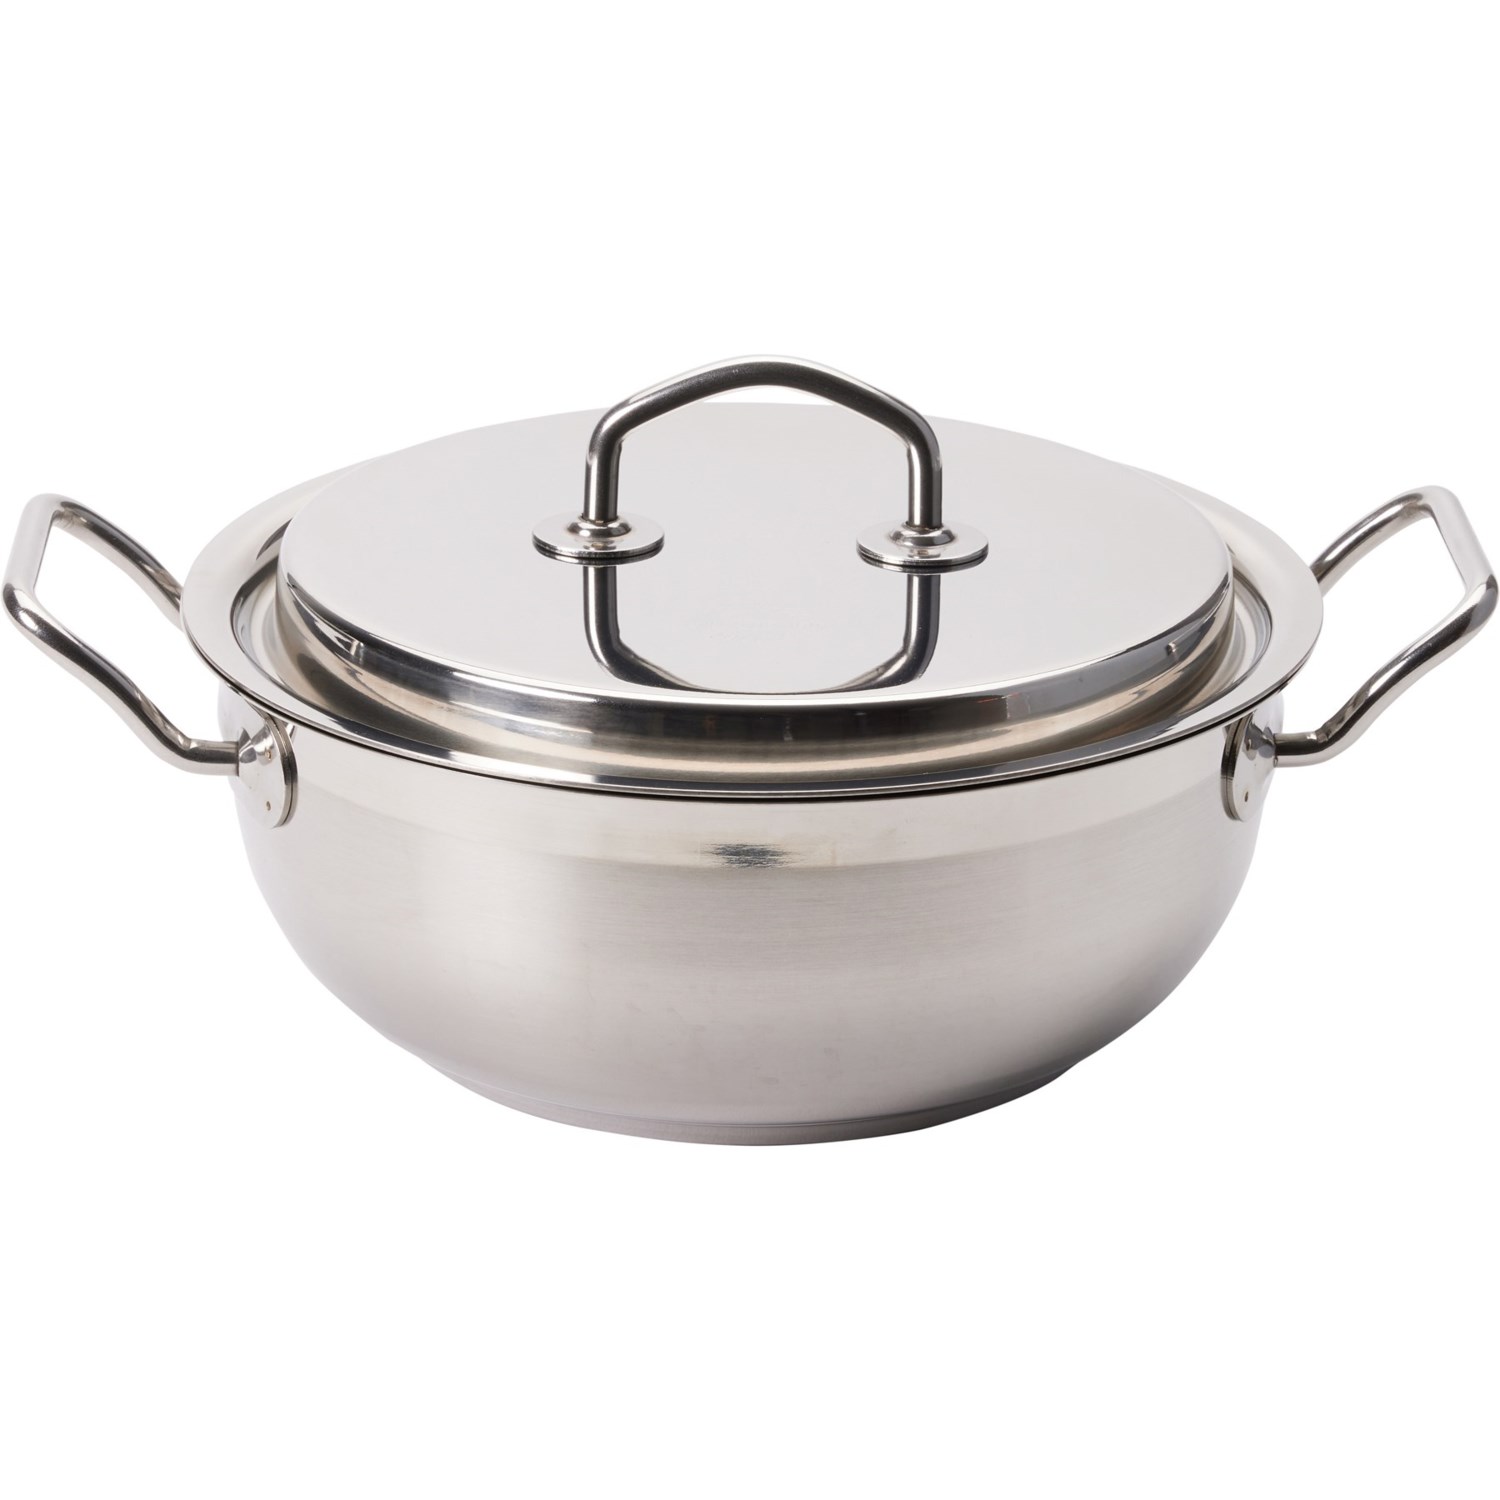 https://i.stpost.com/silga-milano-made-in-italy-teknika-casserole-pan-with-lid-45-qt-in-silver~p~2ugnh_01~1500.2.jpg